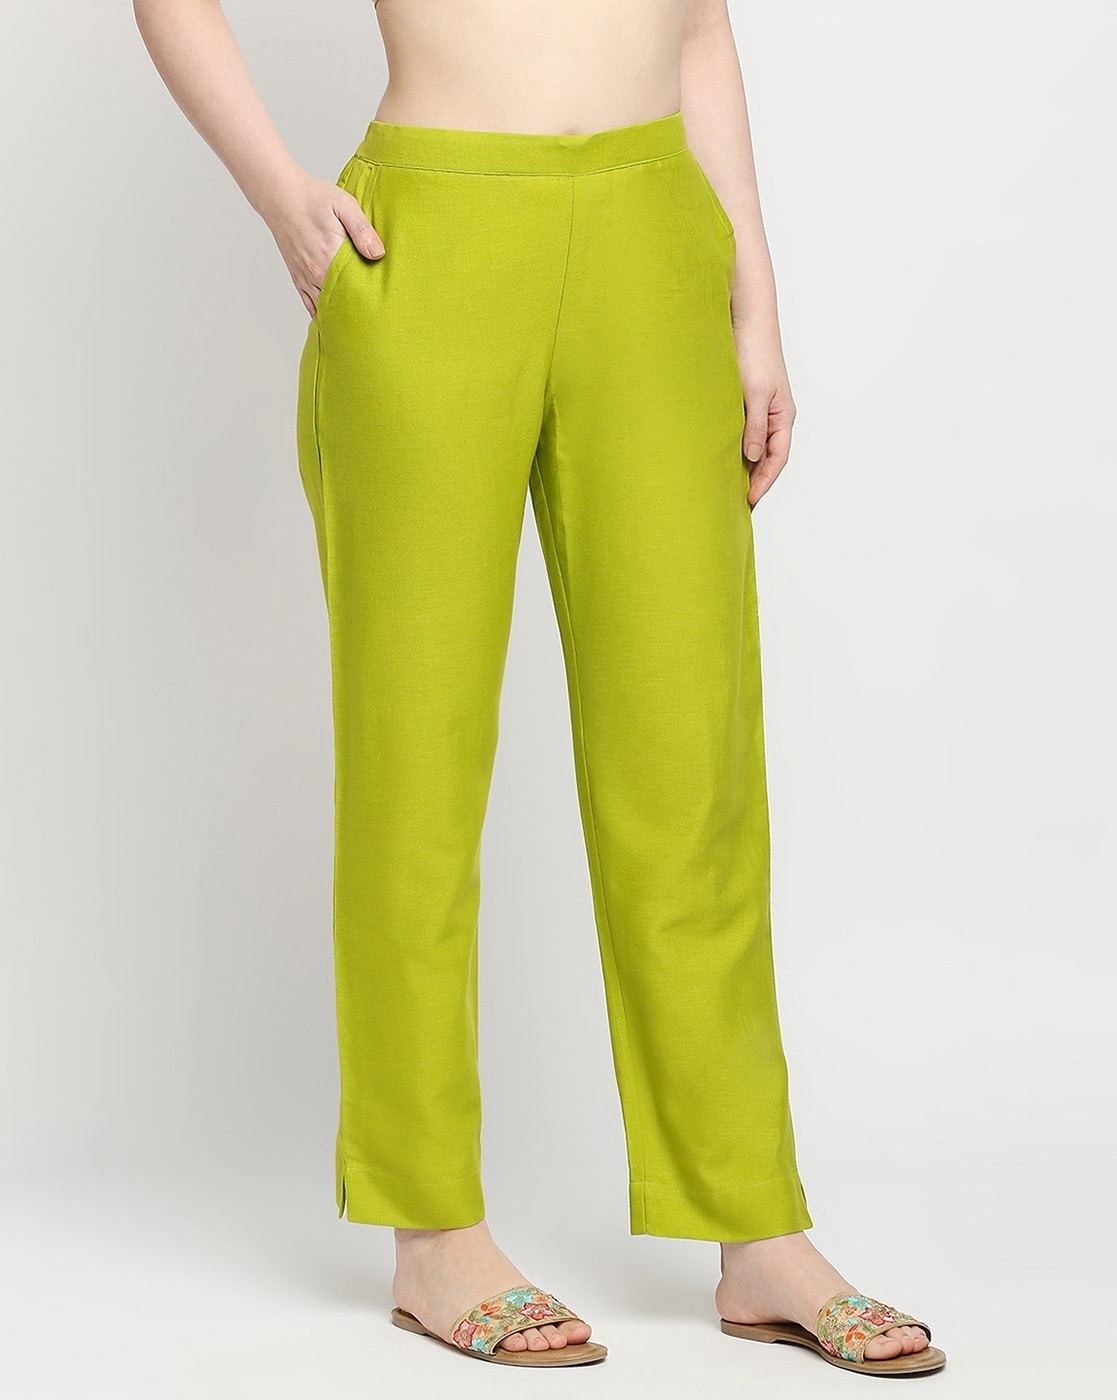 Nylon Parachute Pants - Light green - Ladies | H&M US